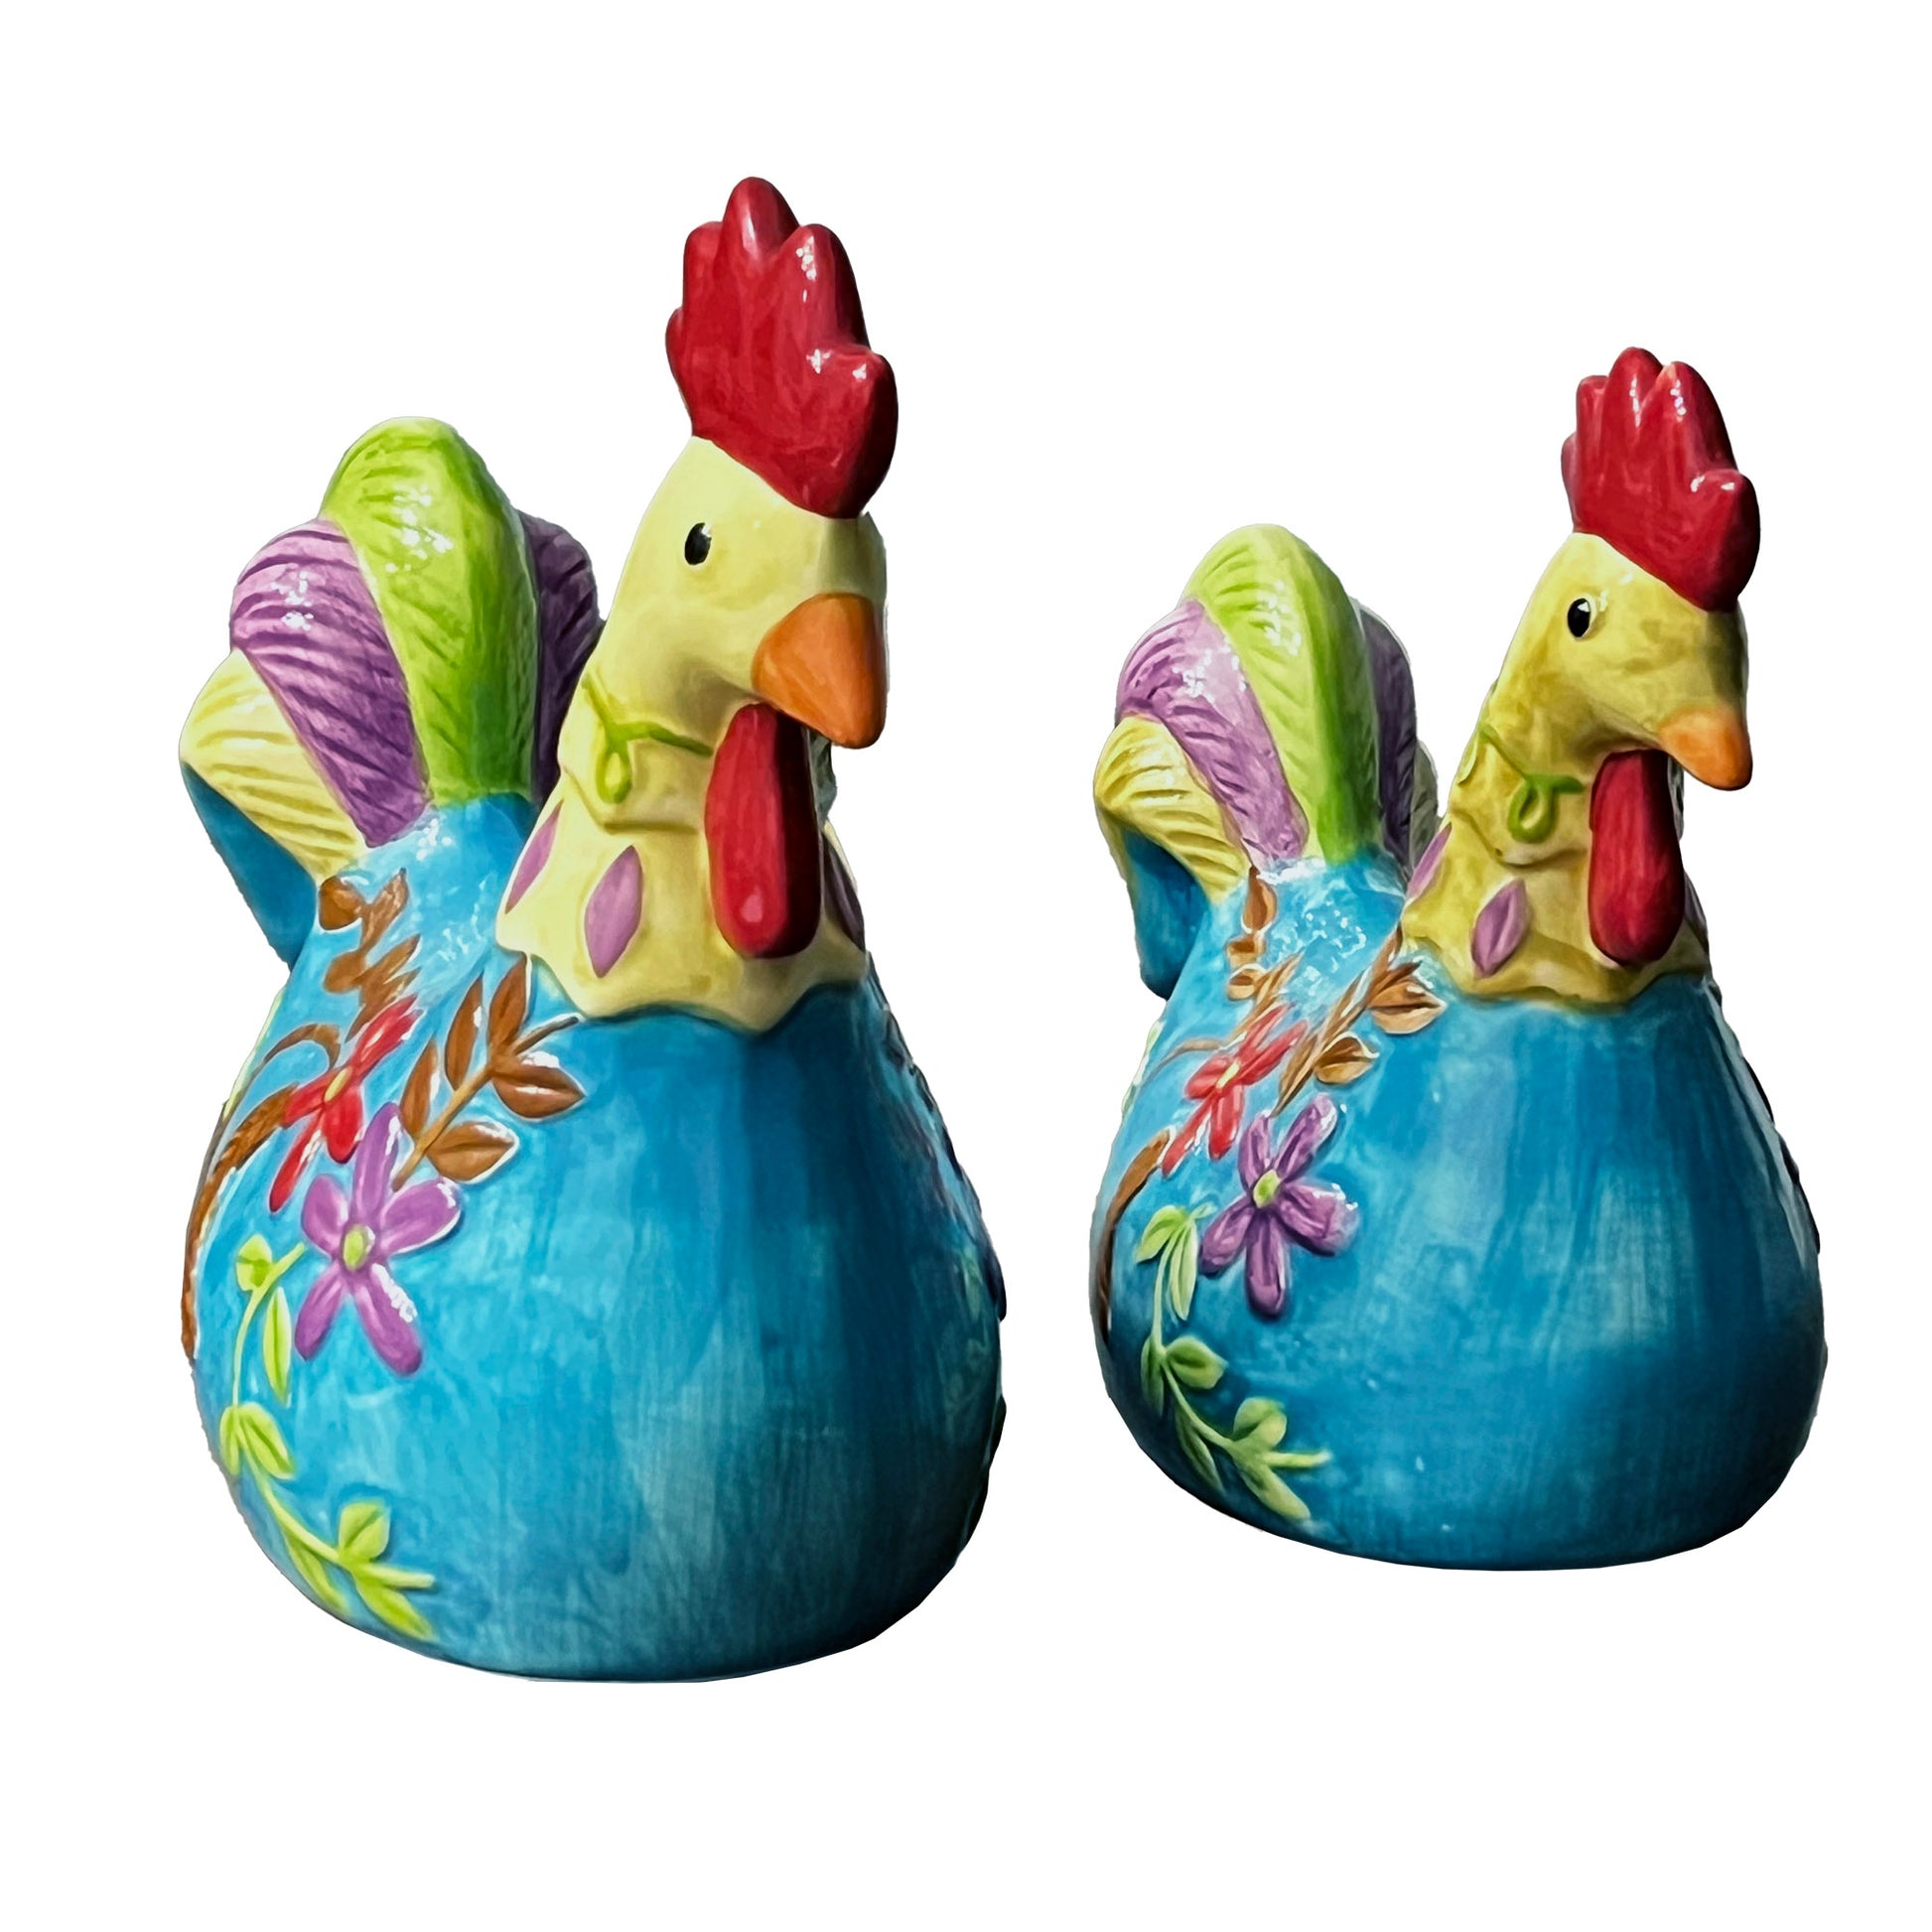 Apropos-Ceramic-Roosters.-Shop-eBargainsAndDeals.com